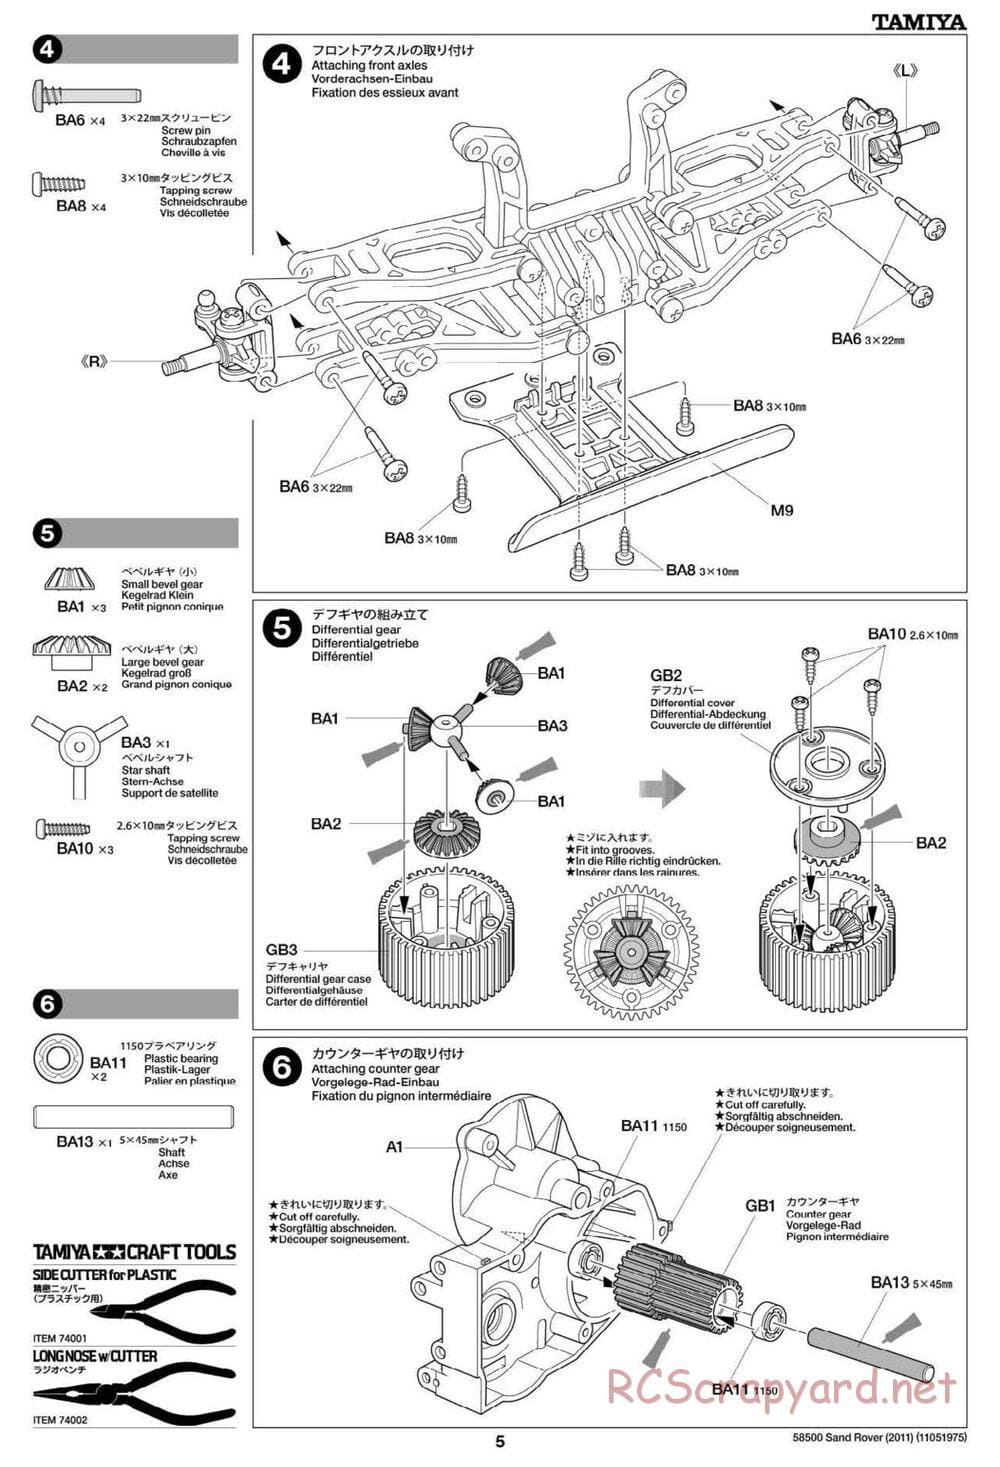 Tamiya - Sand Rover 2011 Chassis - Manual - Page 5